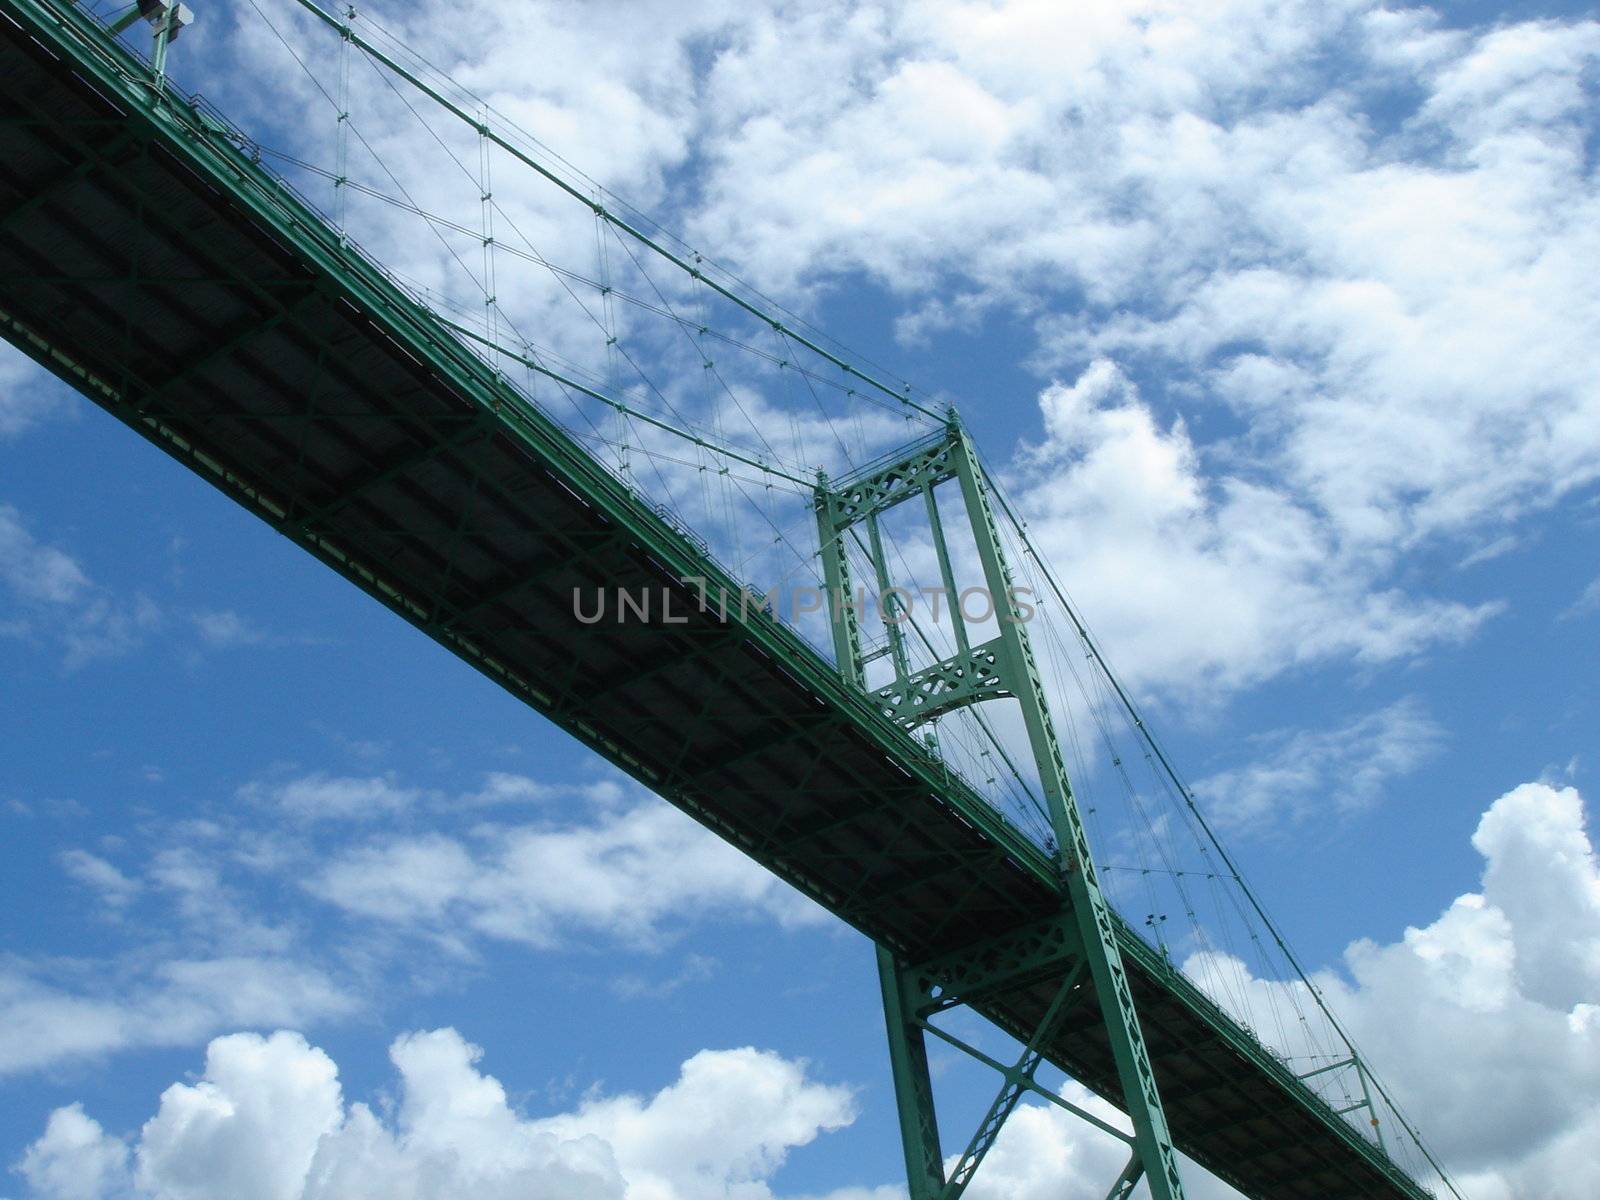 Bridge from under by Elenaphotos21